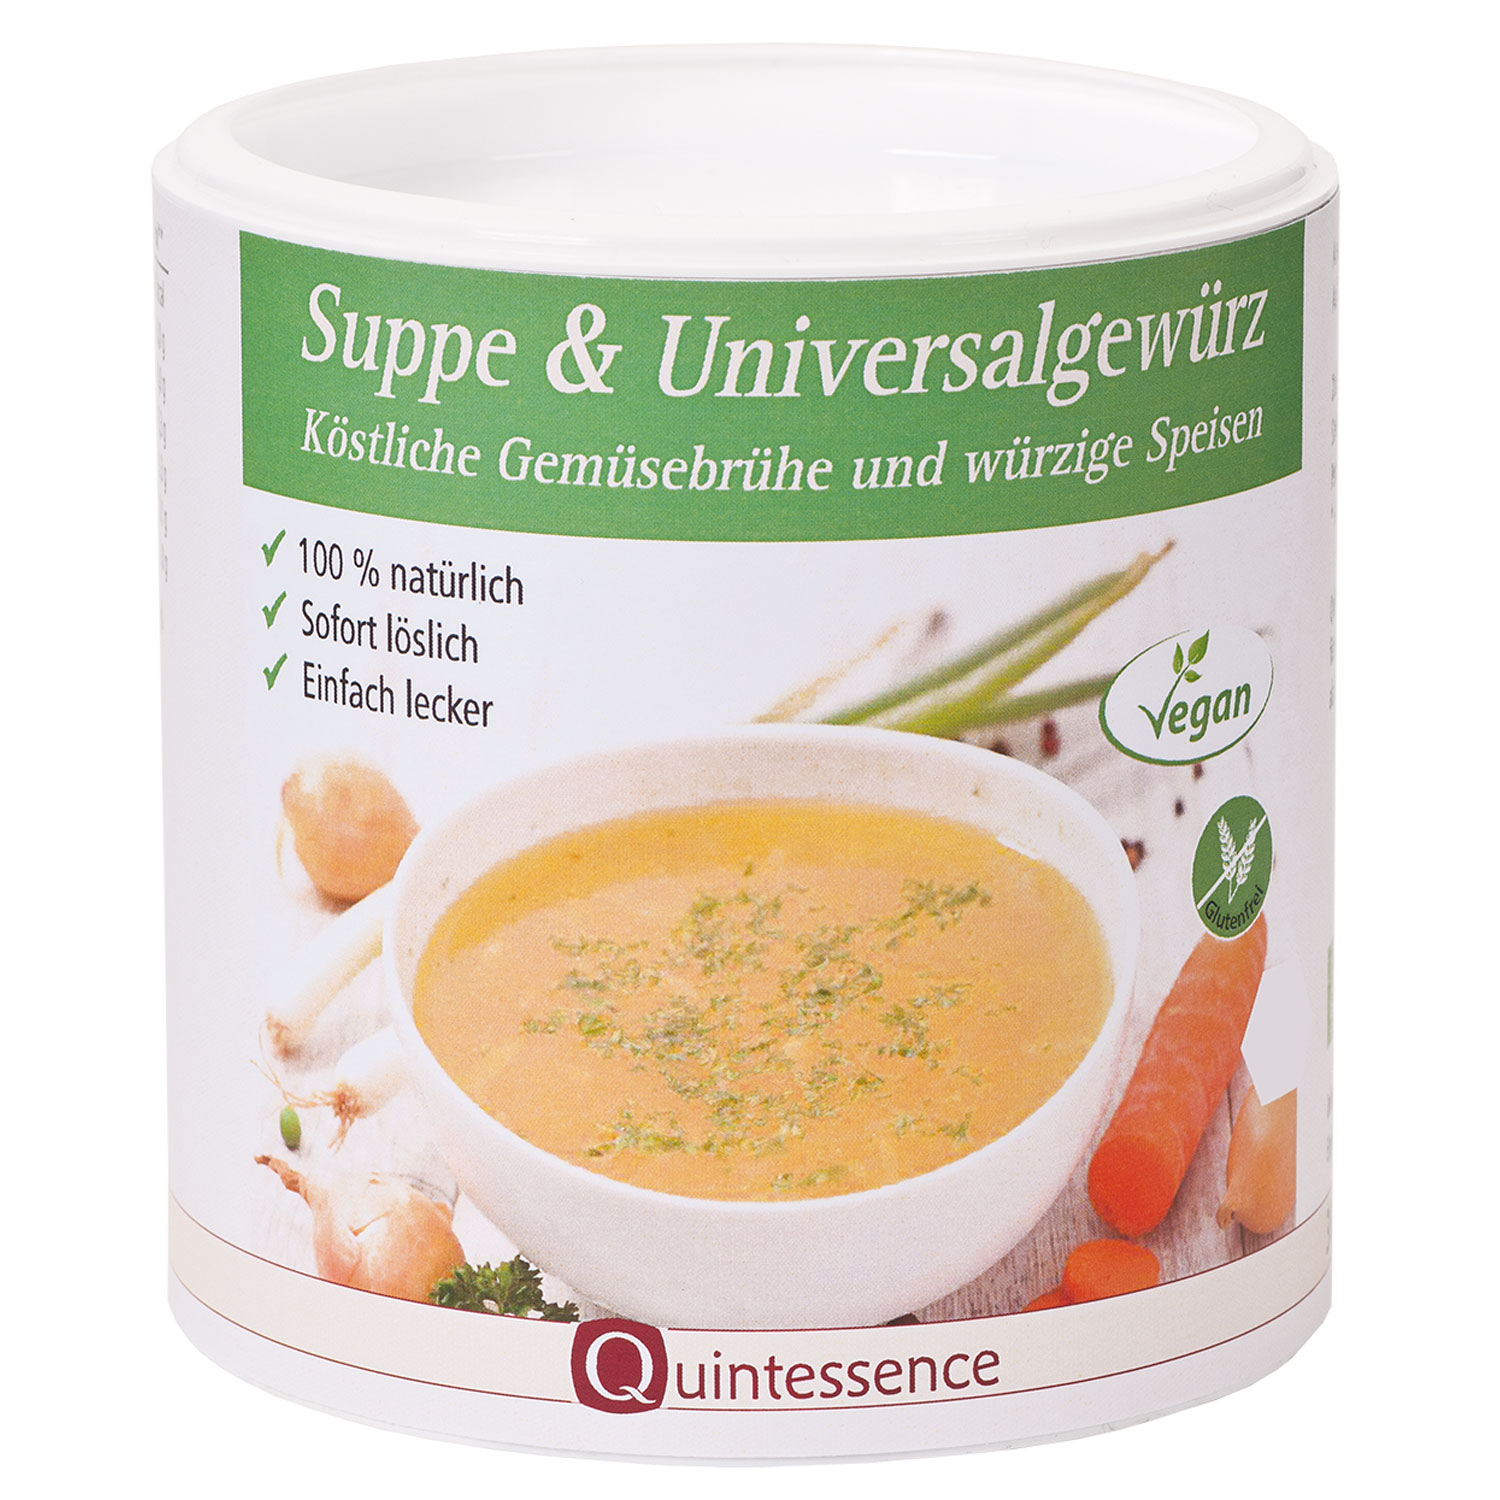 Suppe & Universalgewürz, Quintessence, 300 g